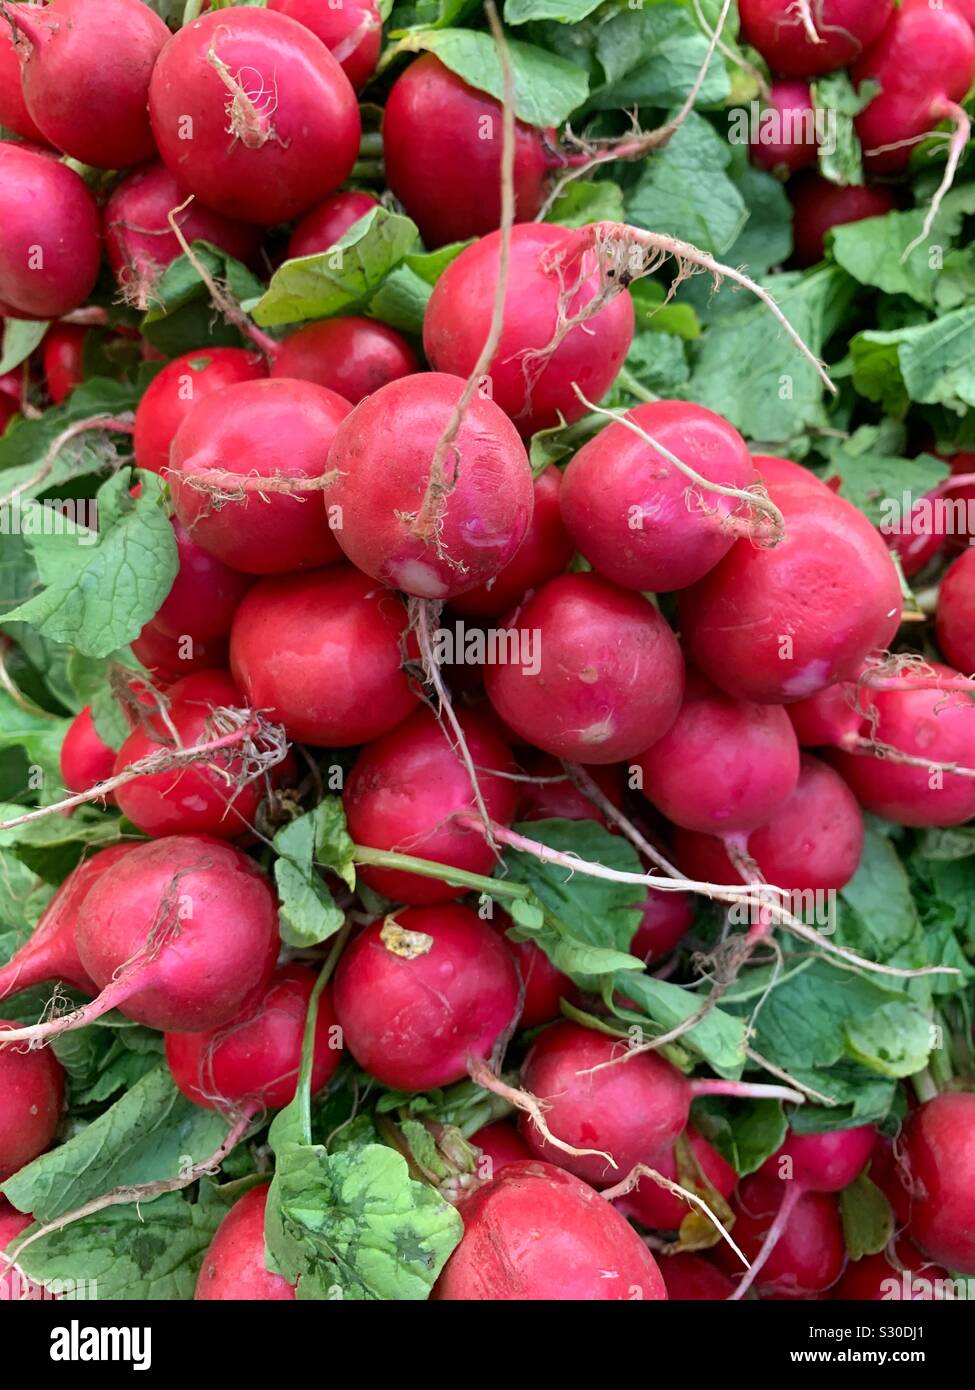 Bunch of red ripe farm fresh radishes, Raphanus raphanistrum Stock Photo